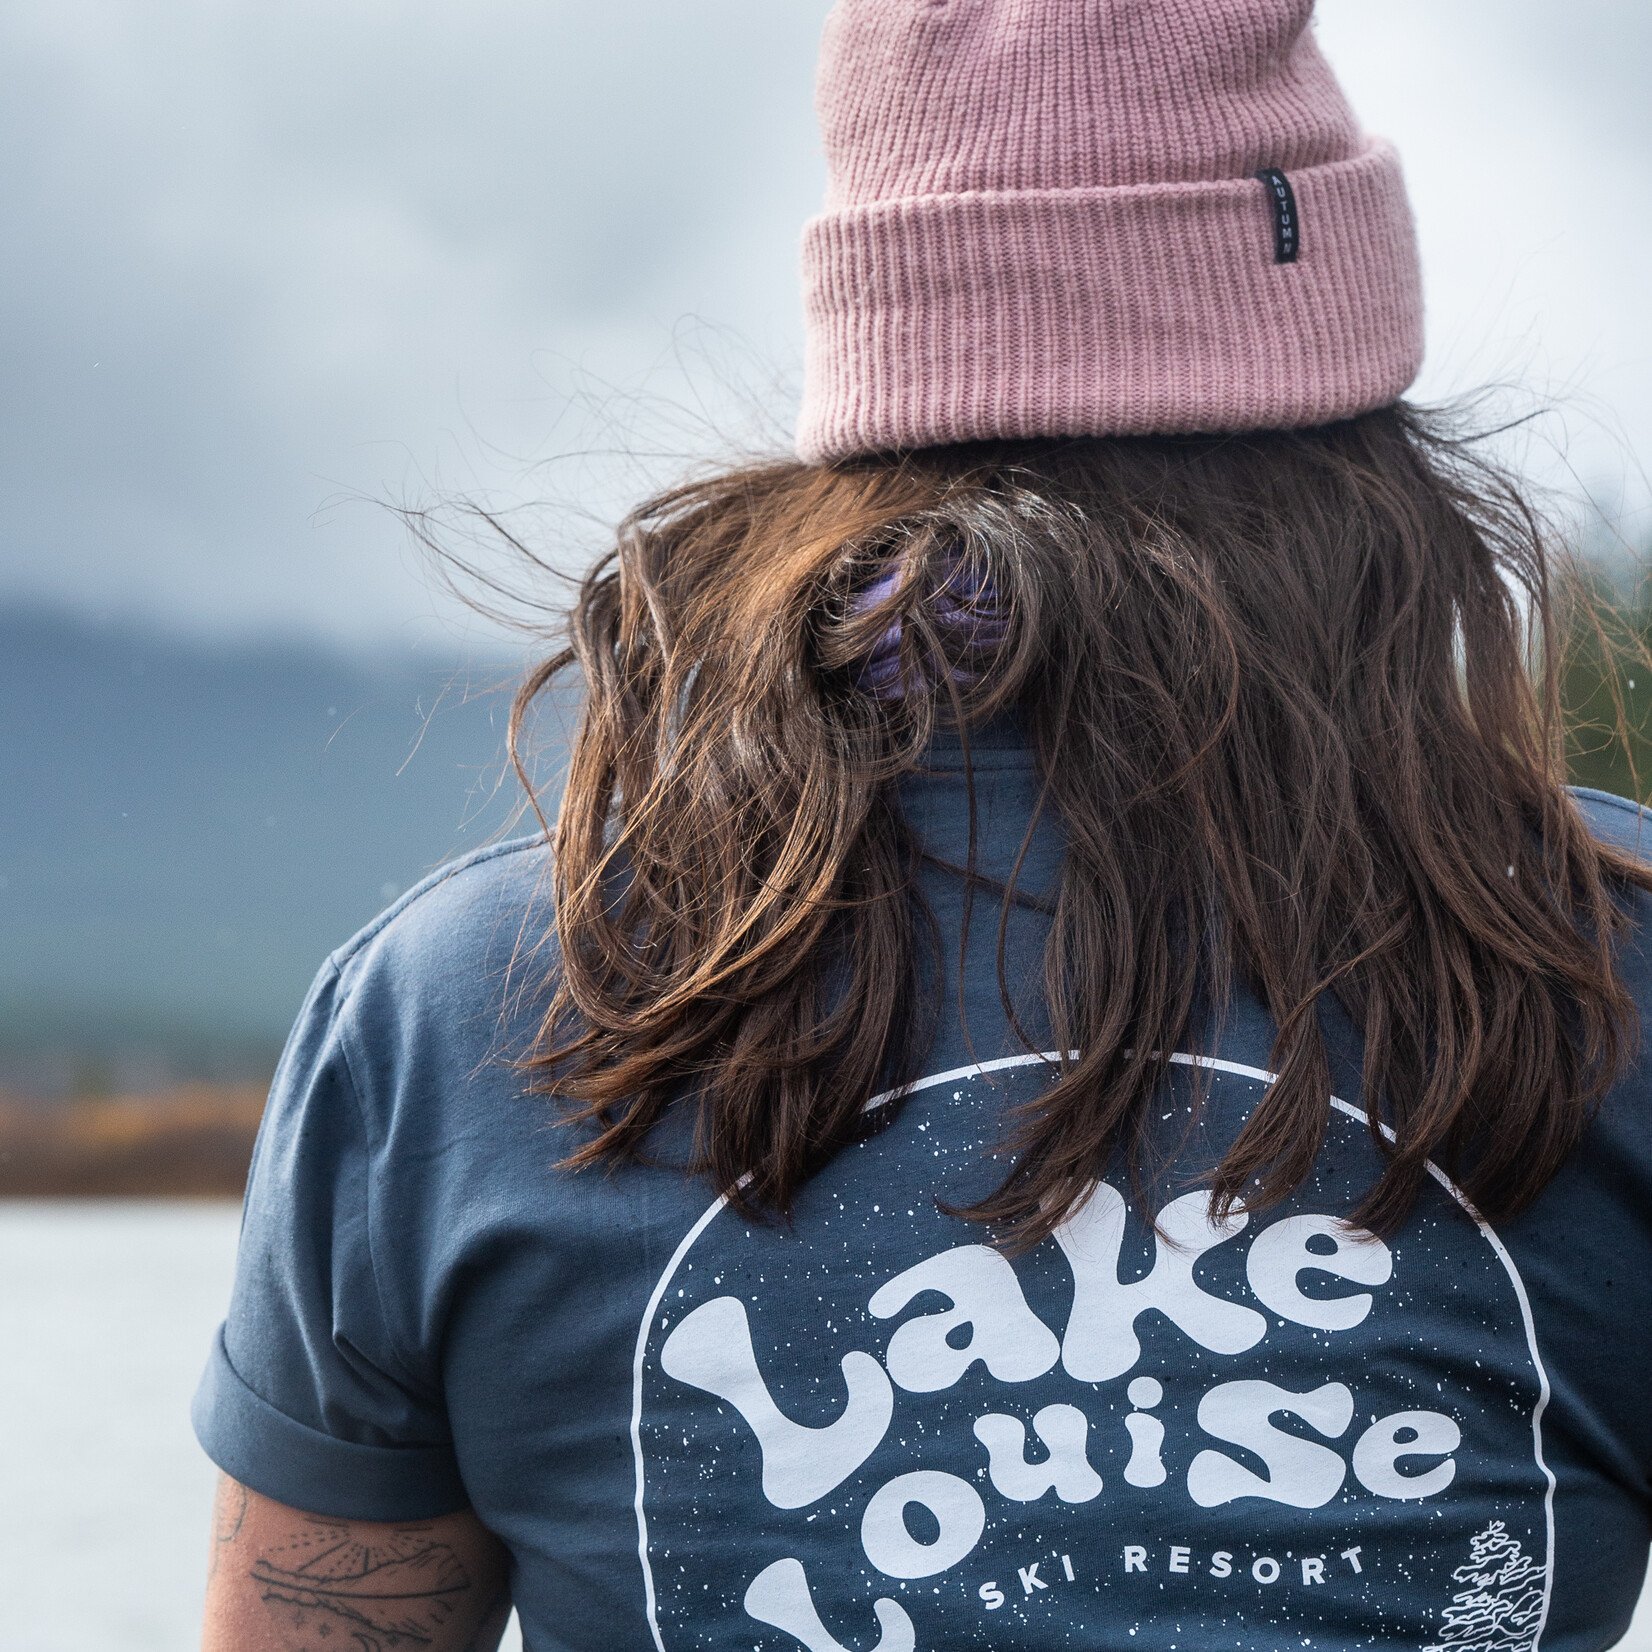 SkiBig3 SkiBig3 Lake Louise Ski Resort T-Shirt